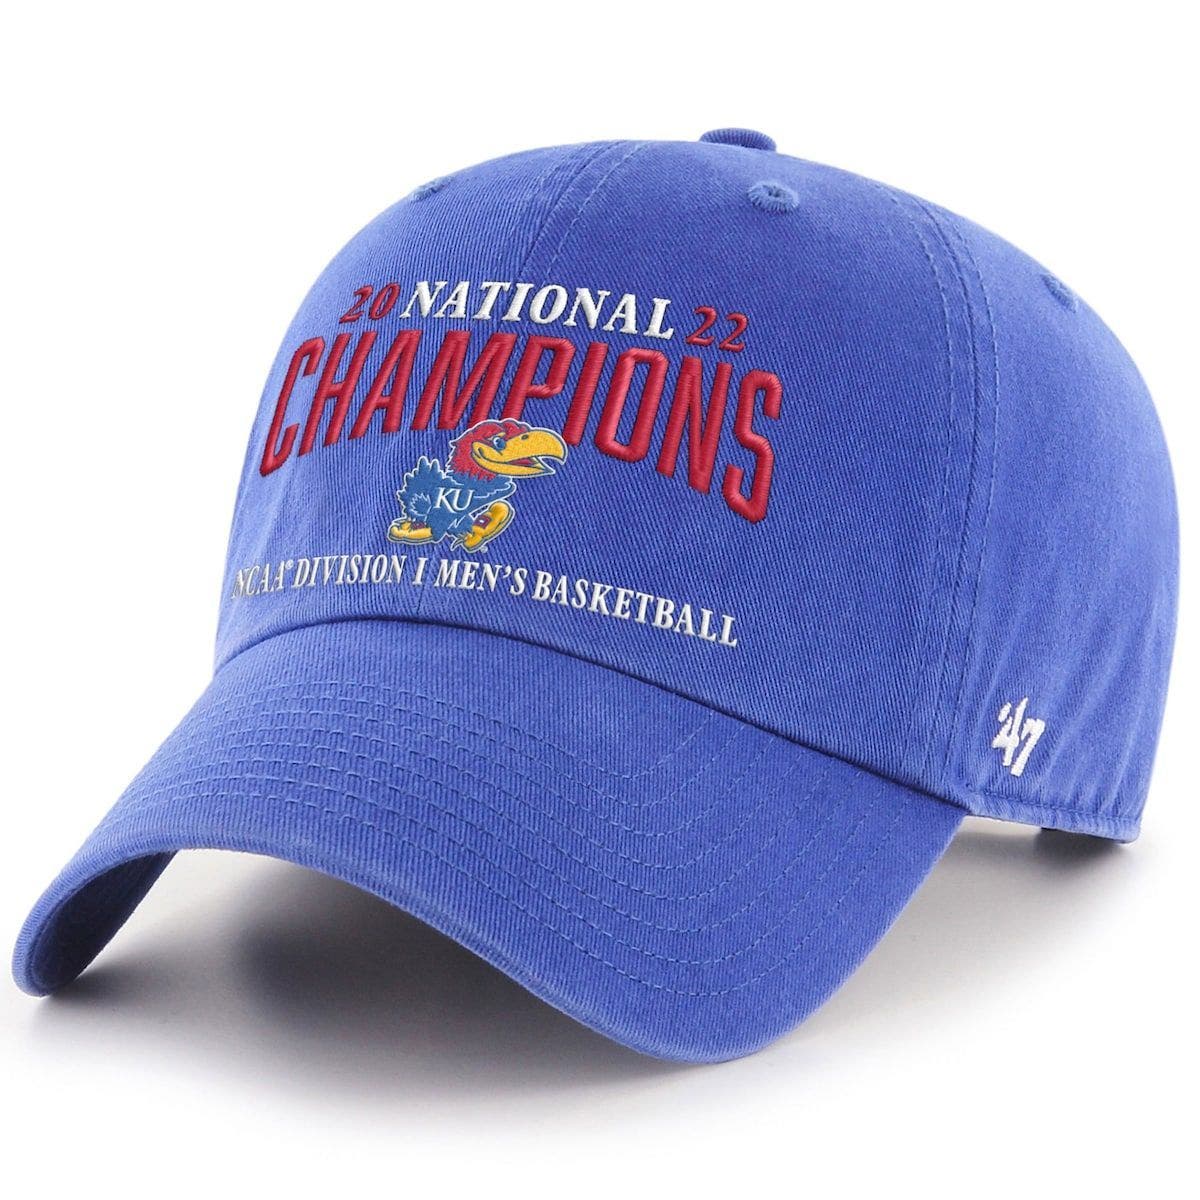 NCAA by Signatures Mens Uconn Huskies Adjustable Denim Embroidered Hat